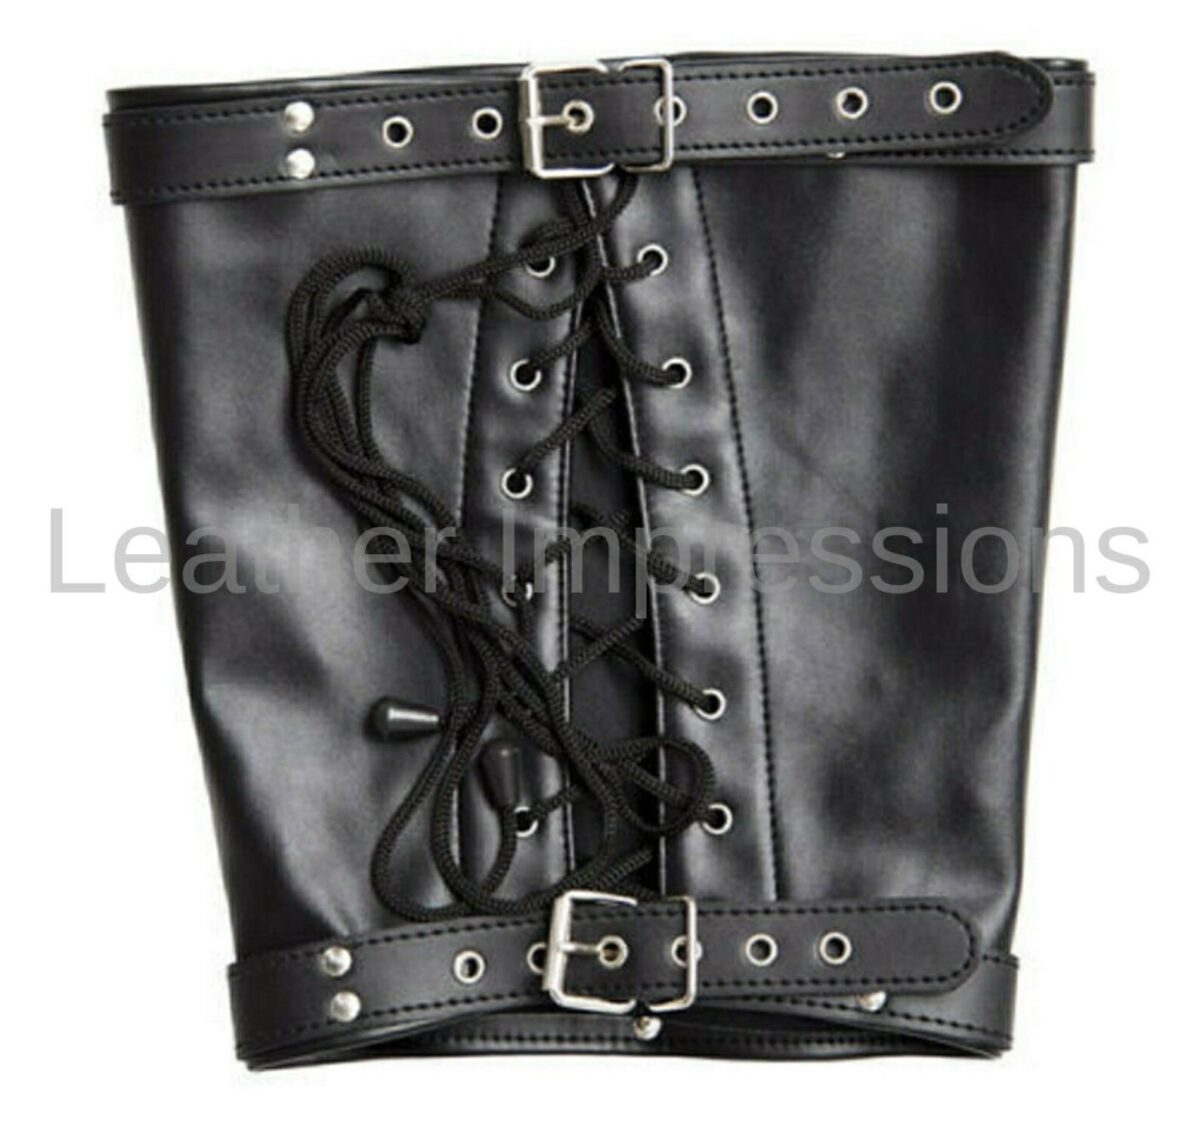 Genuine Leather BDSM Leg Binder, bdsm wrist and ankle cuffs, extreme bondage restraints, bdsm leather restraints